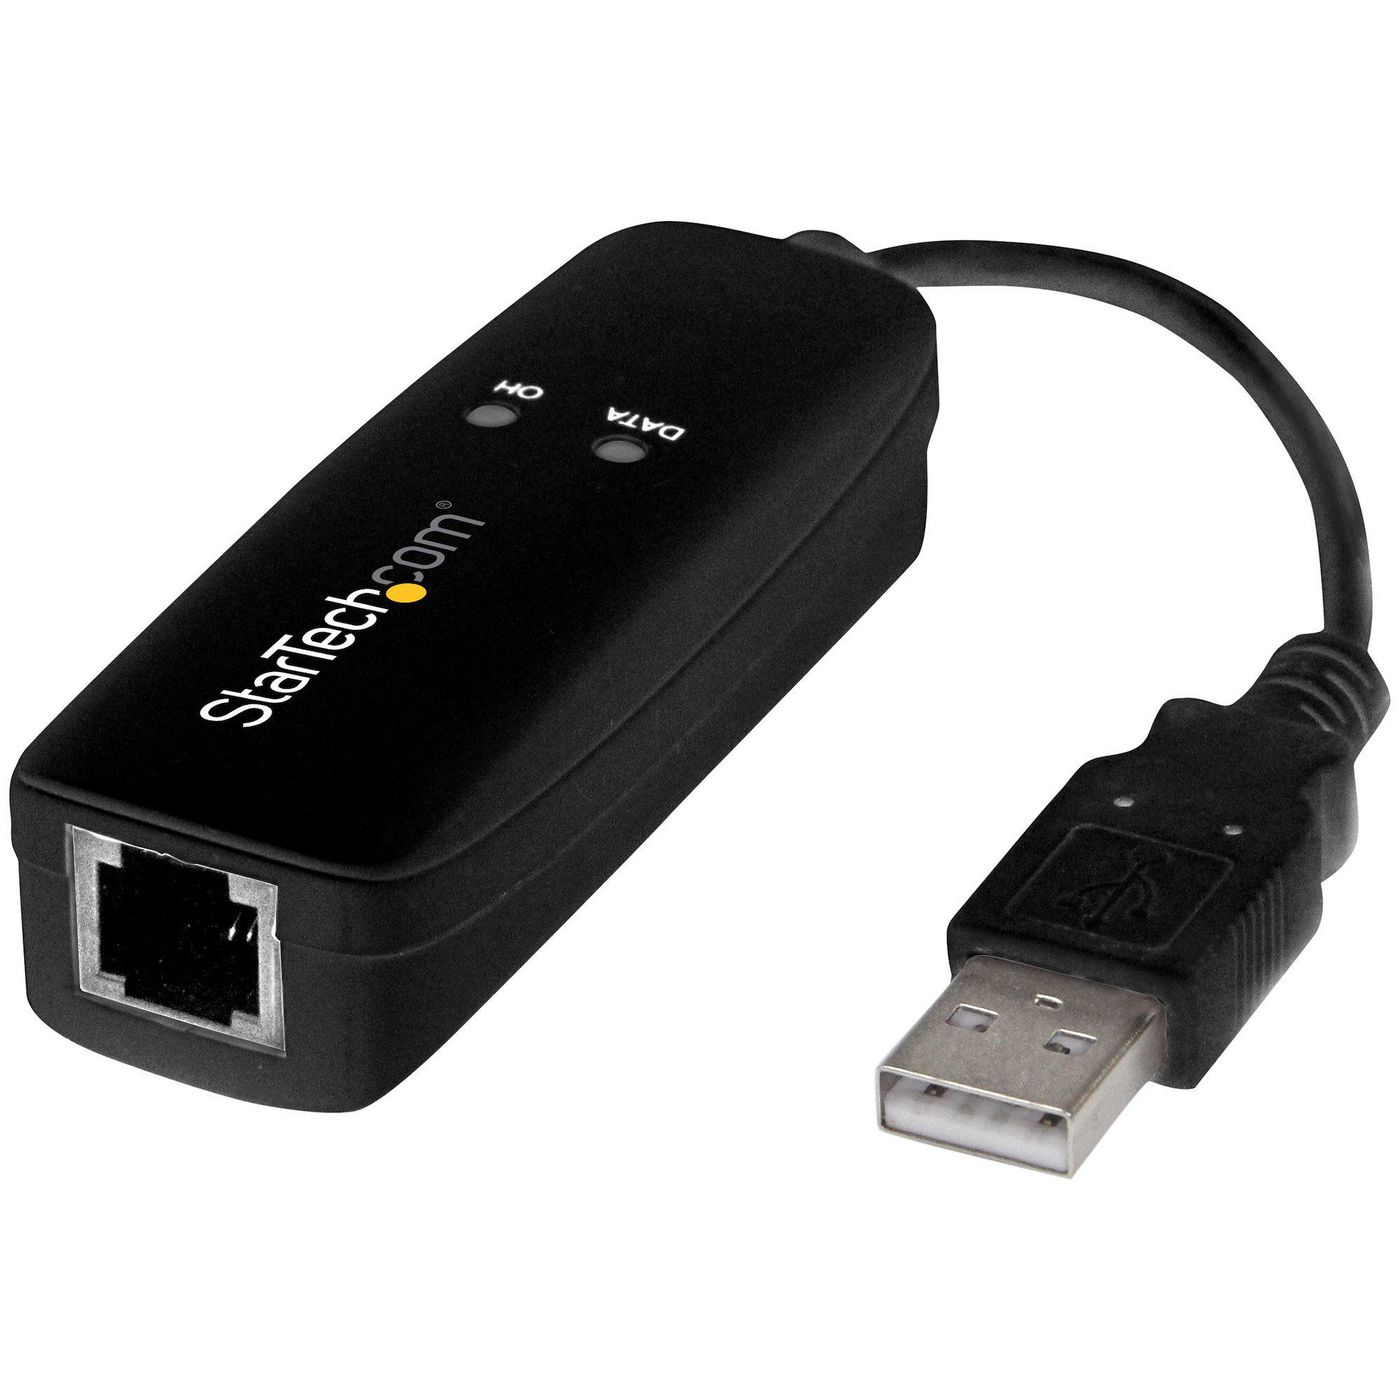 STARTECH.COM 56K USB Einwahl und Fax Modem - V.92 - Extern - Hardwarebasierend - USB Modem - 56kbit